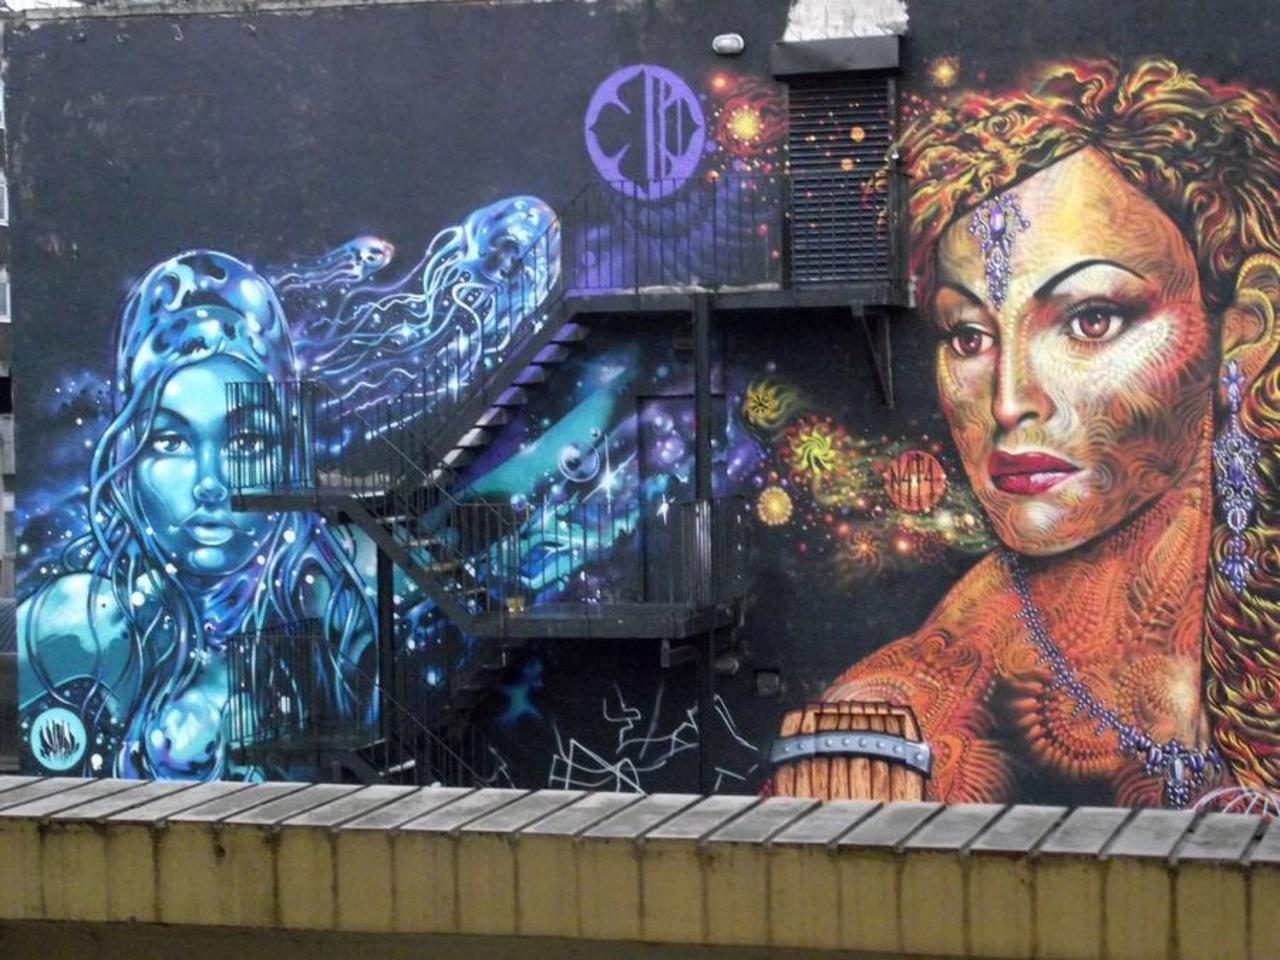 “@Pitchuskita: Philth 
Manchester

#streetart #art #urbanart #graffiti #mural http://t.co/5rOY37btl0”